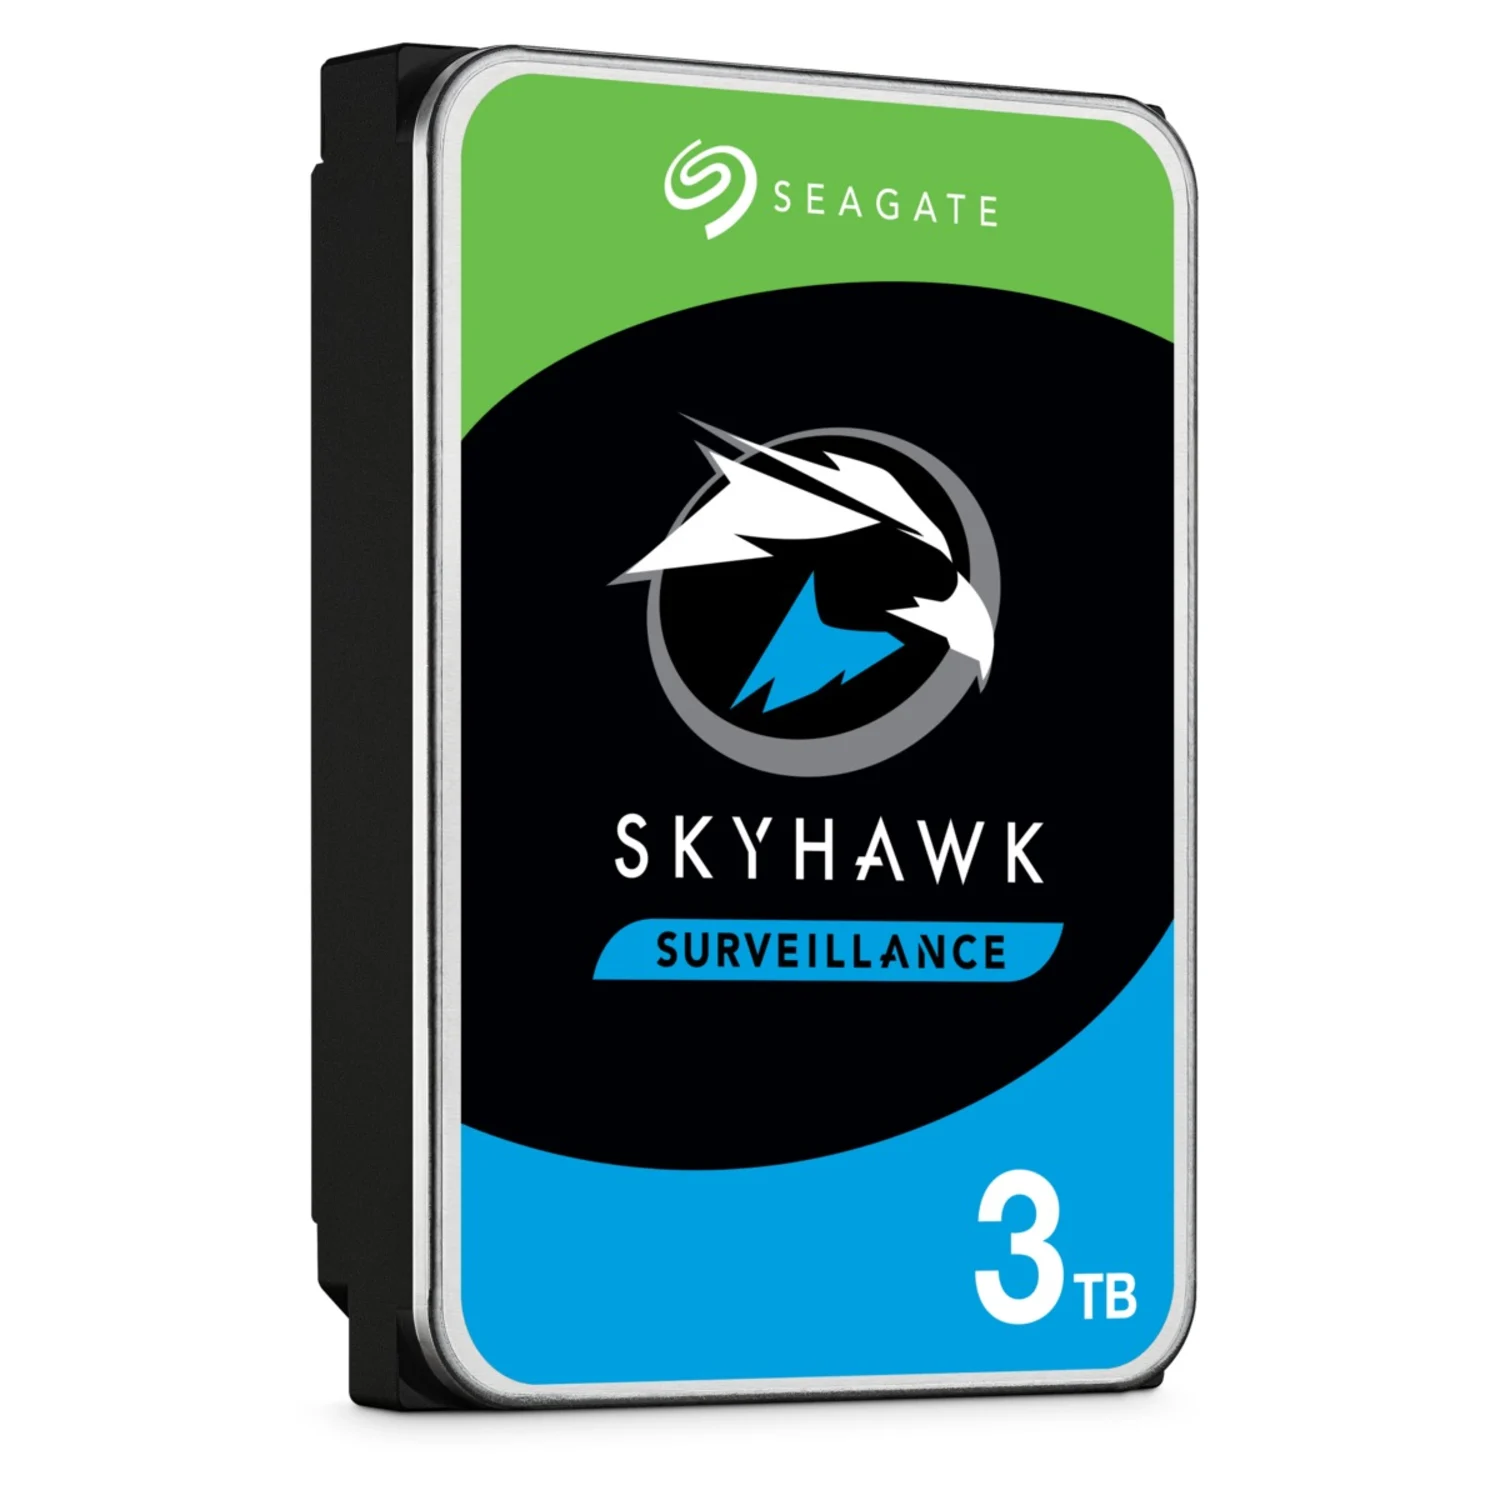 HD Interno Seagate SkyHawk Surveillance 3TB SATA3 5900RPM - ST3000VX009